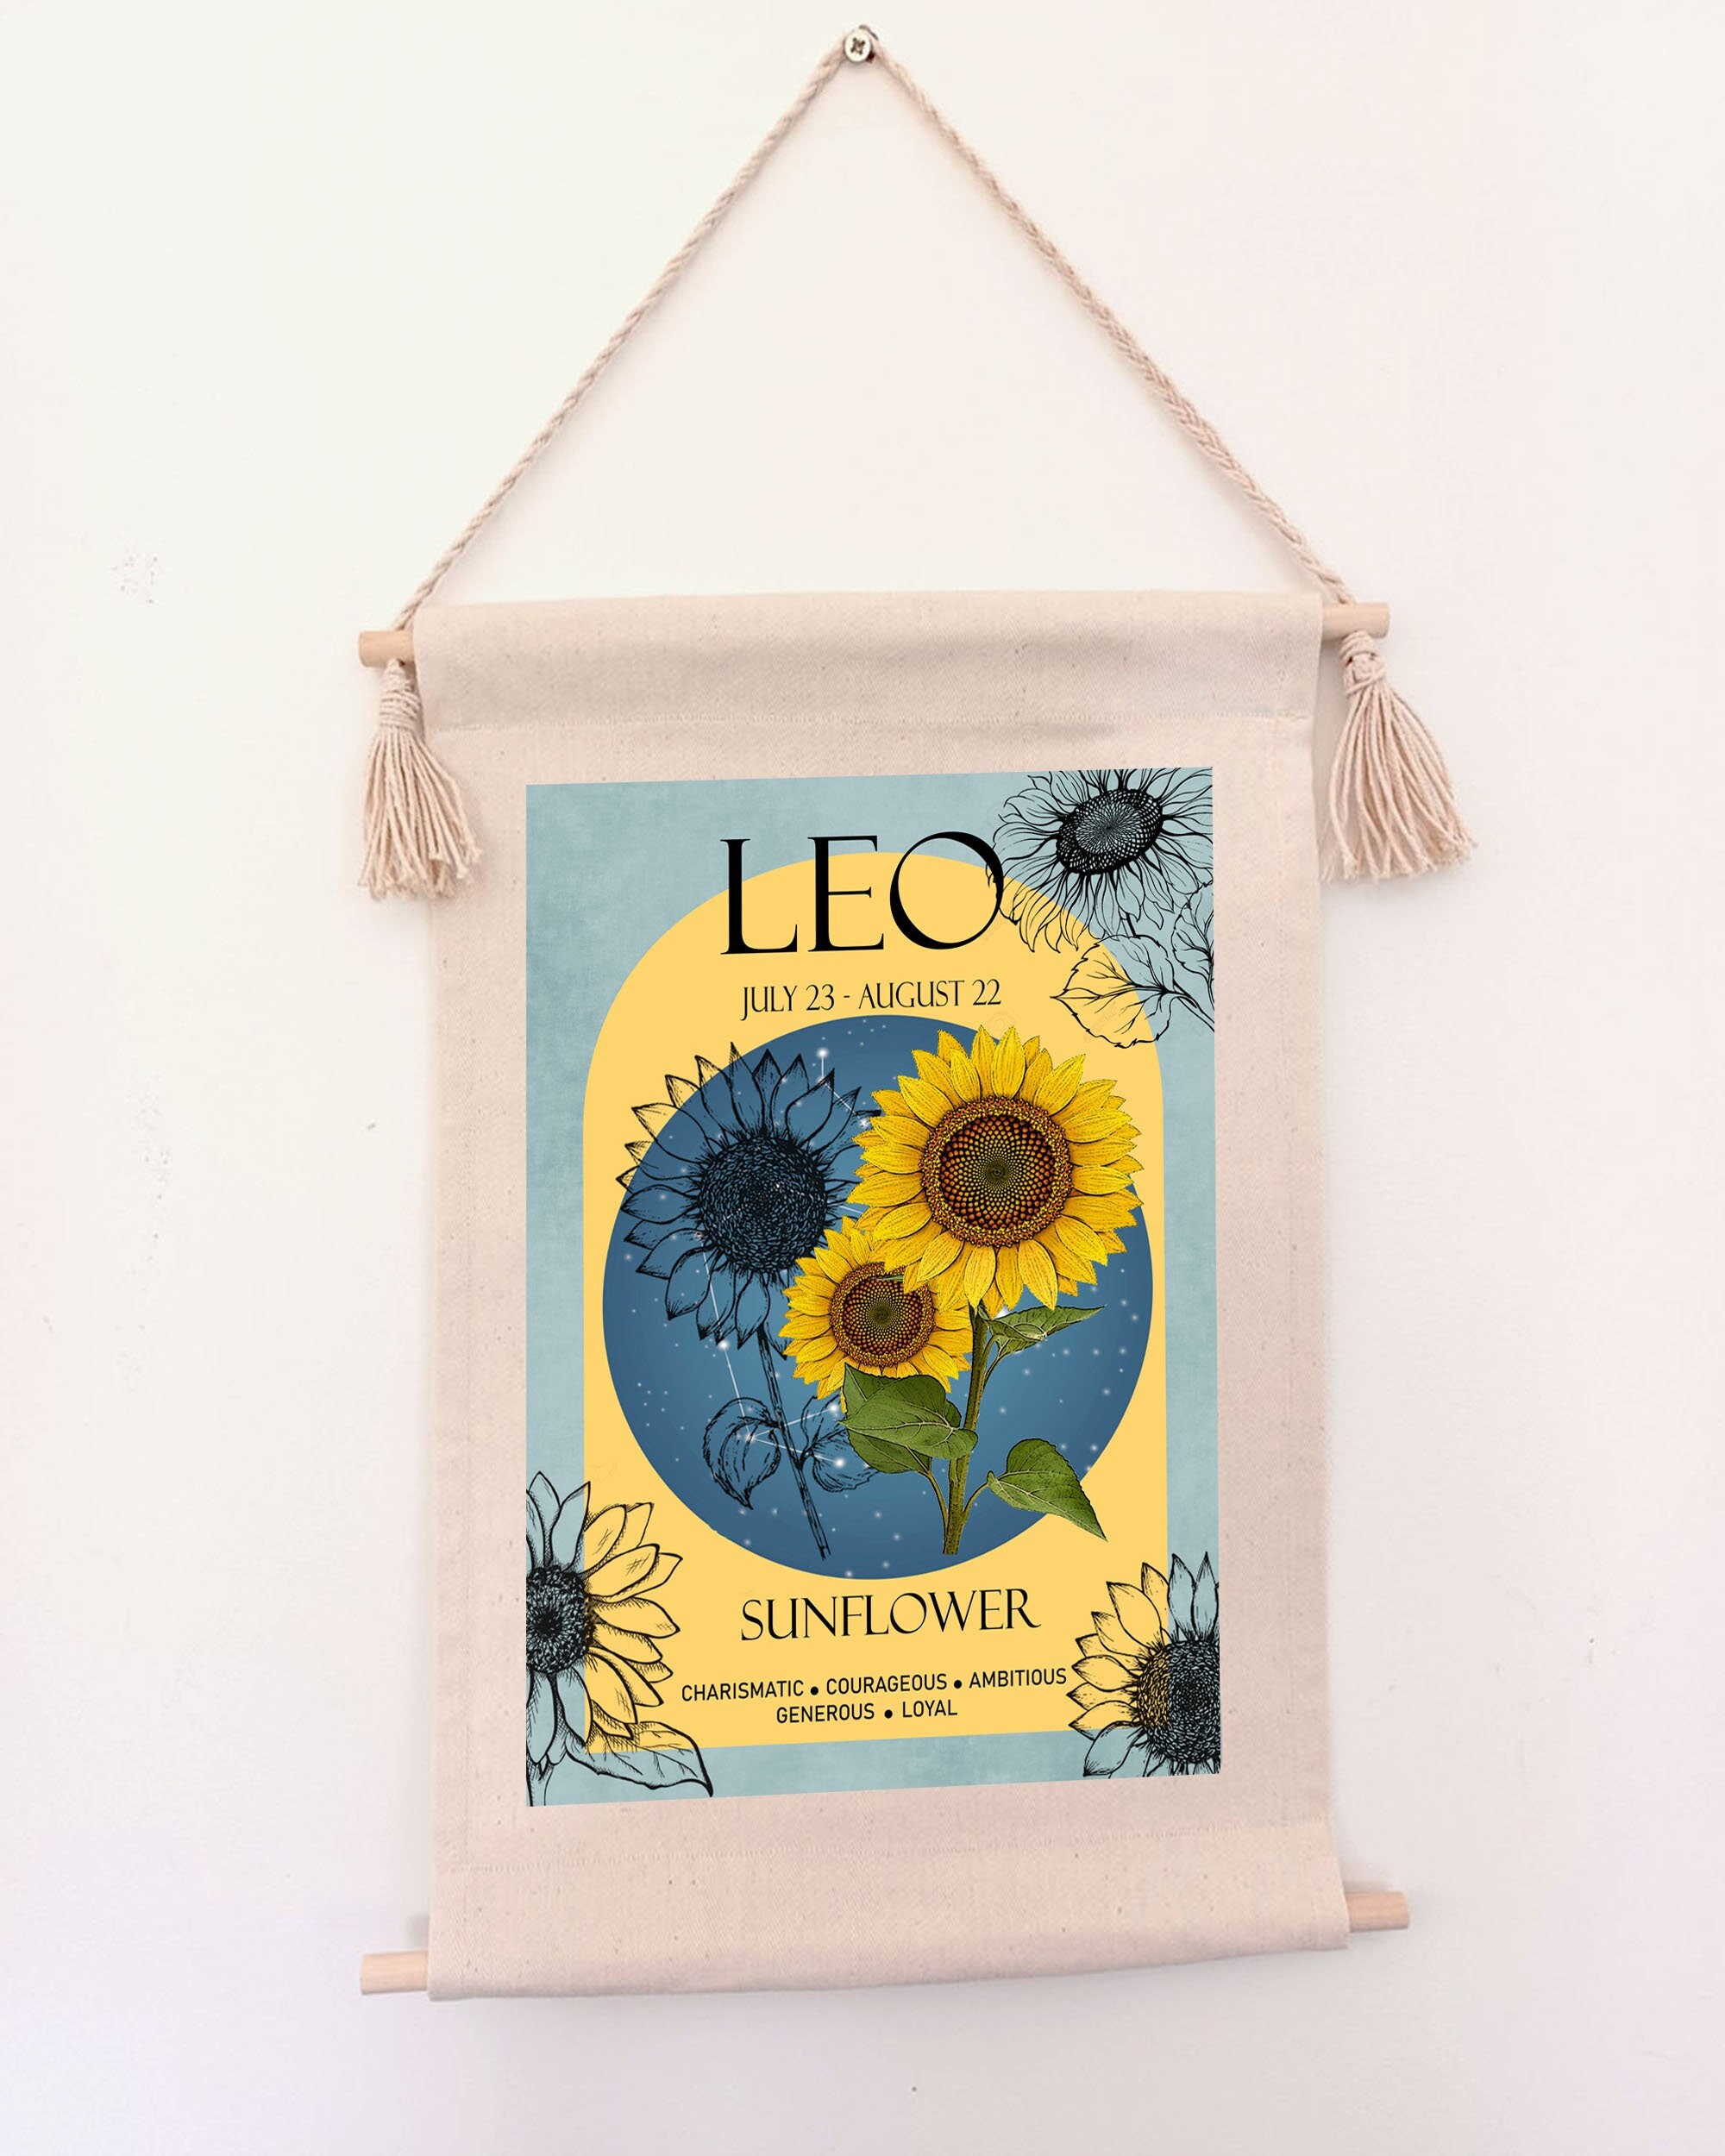 Sunflower Leo - Etsy UK